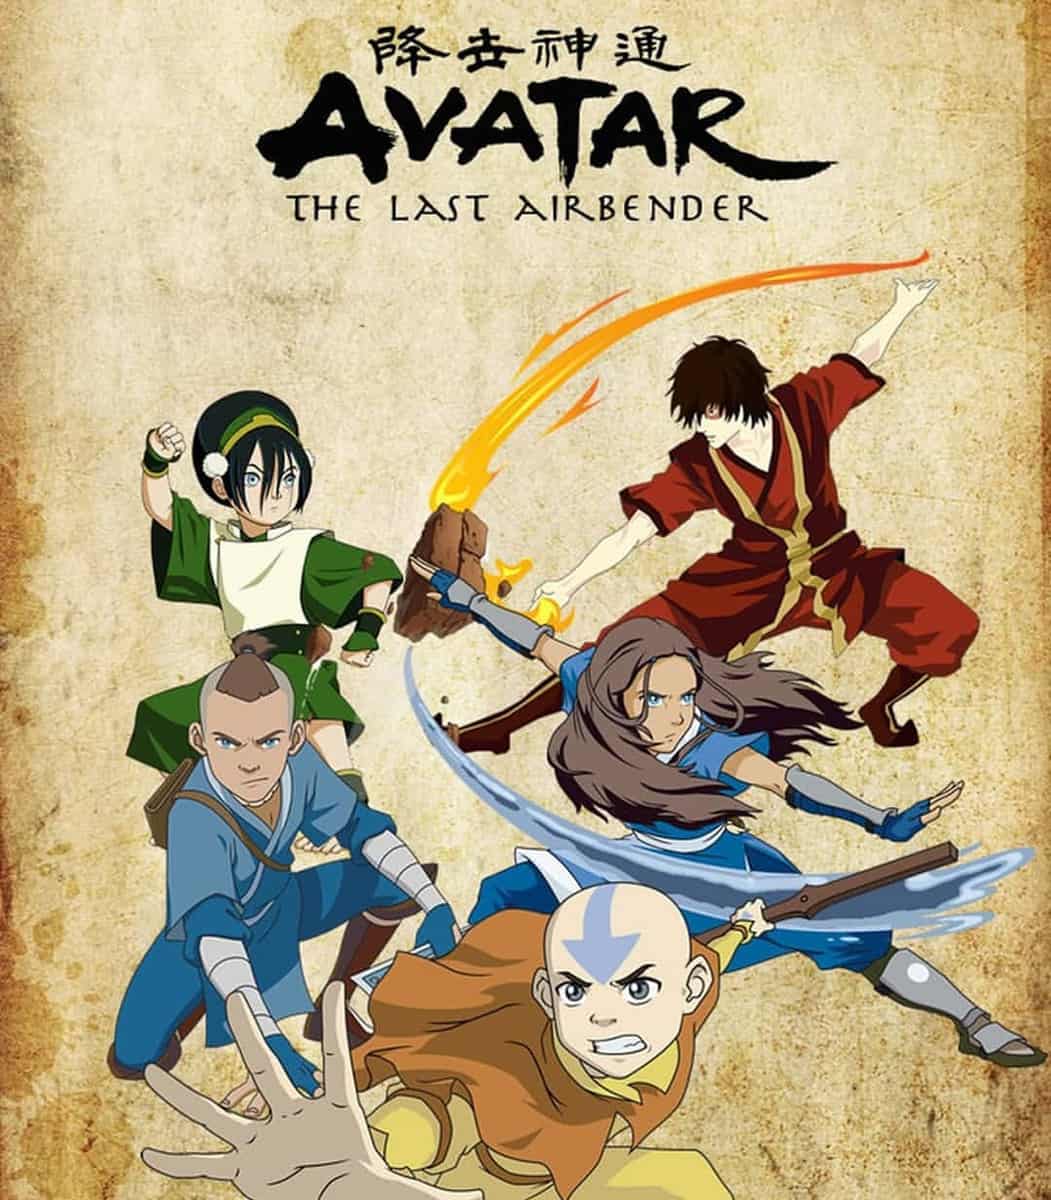 15 Essential Avatar The Last Airbender Episodes to Watch